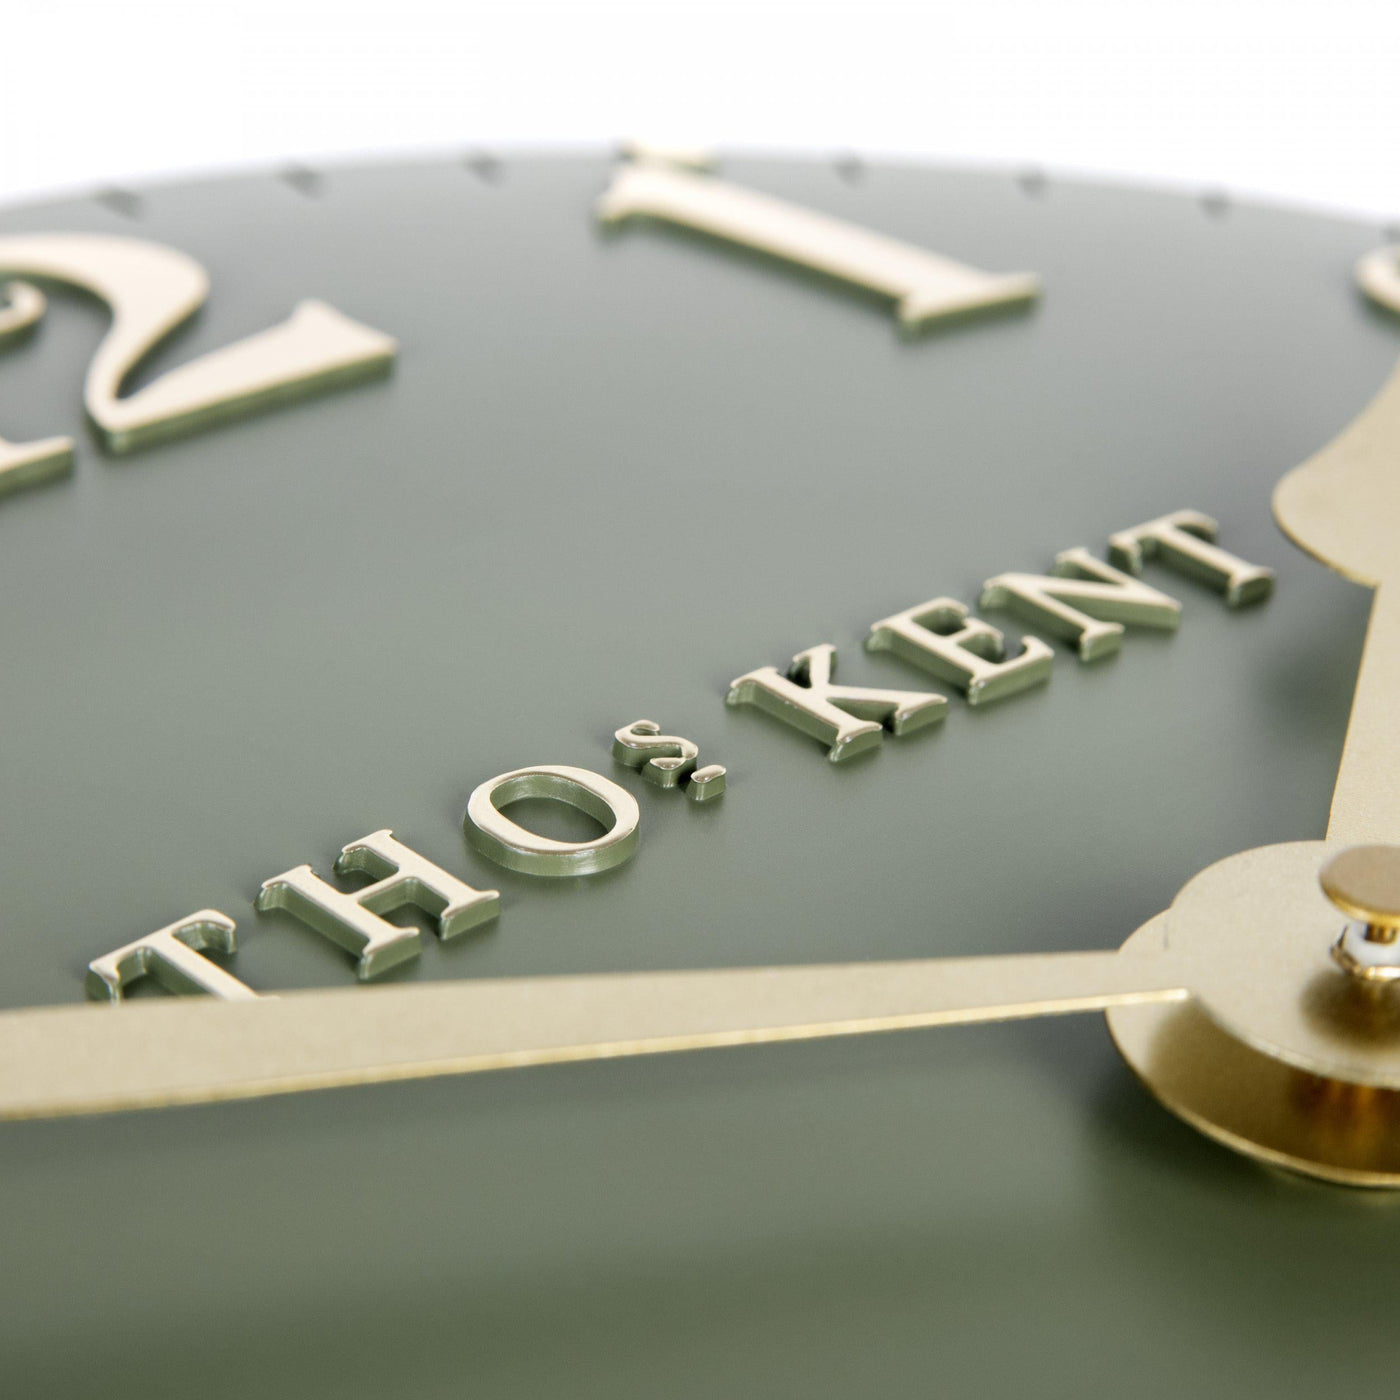 Thomas Kent London. Arabic Wall Clock 12" (31cm) Lichen Green - timeframedclocks